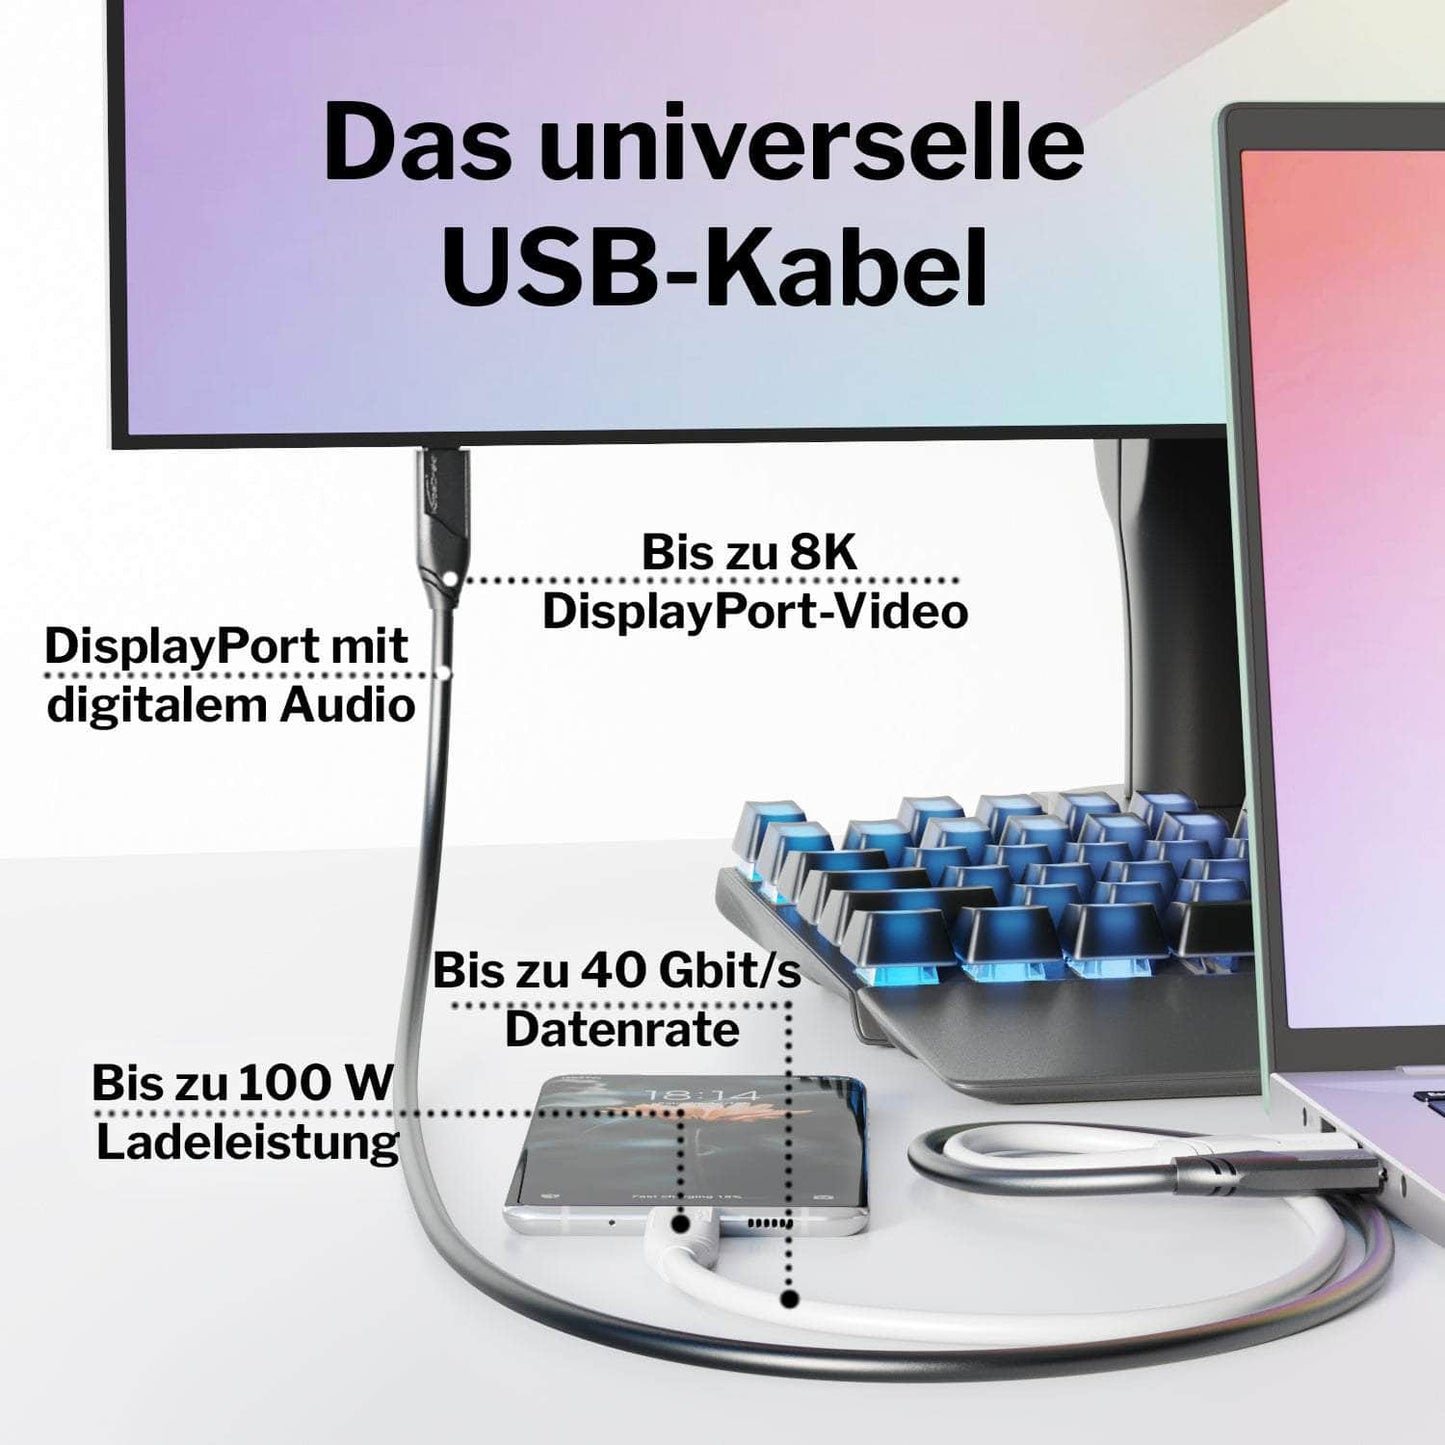 USB-C-Kabel - USB 4.0, Power Delivery 3, Thunderbolt 4, weiß - 2m